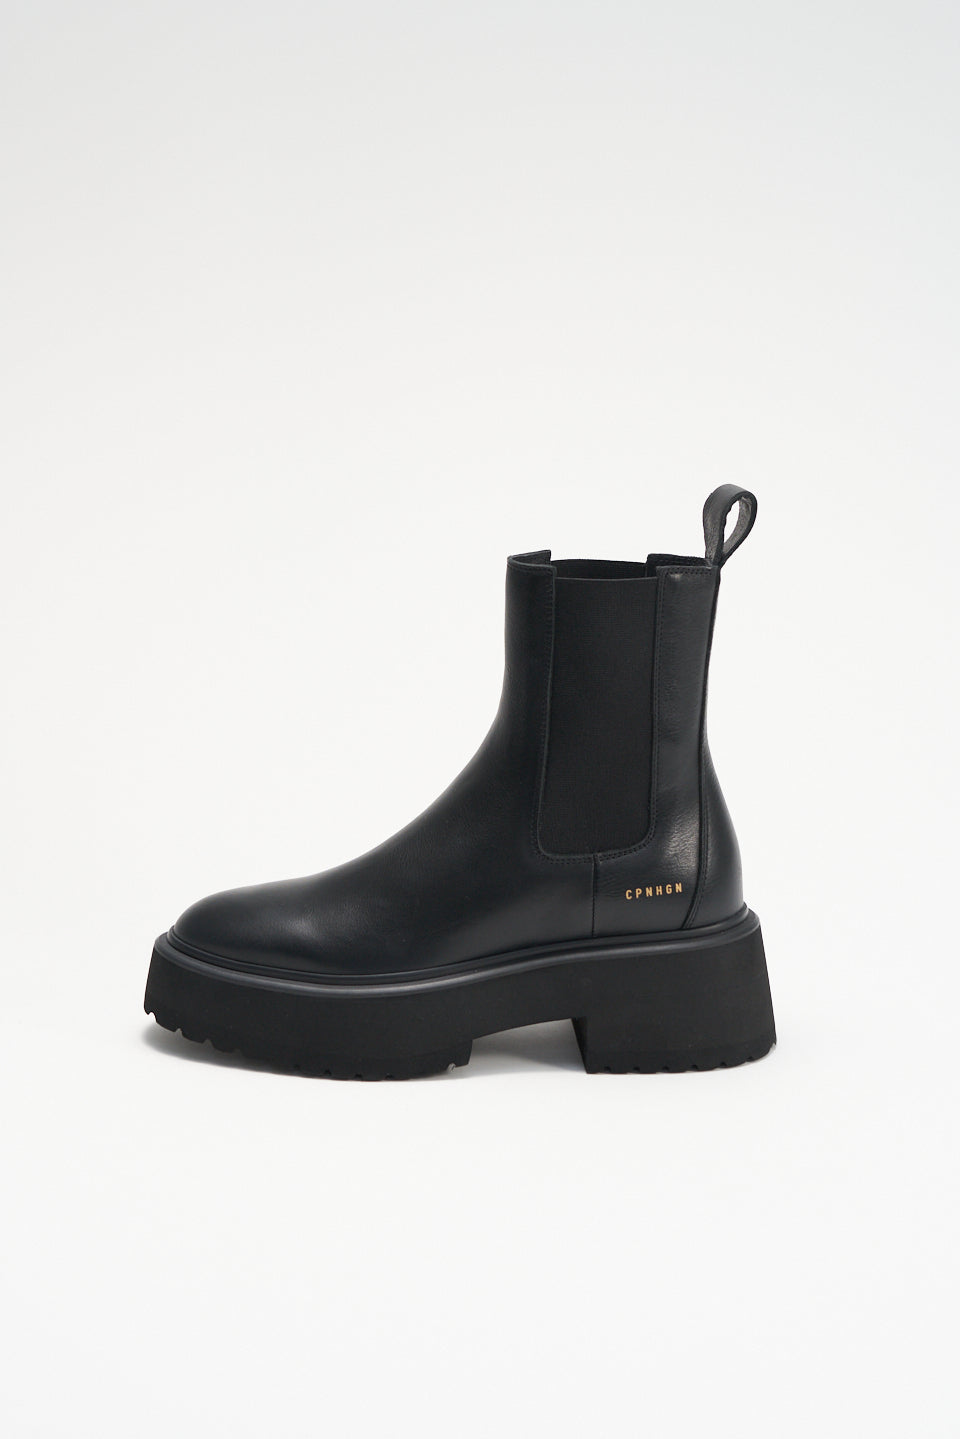 Vitello Black Low Chelsea Boots CPH683_BLACK - 6